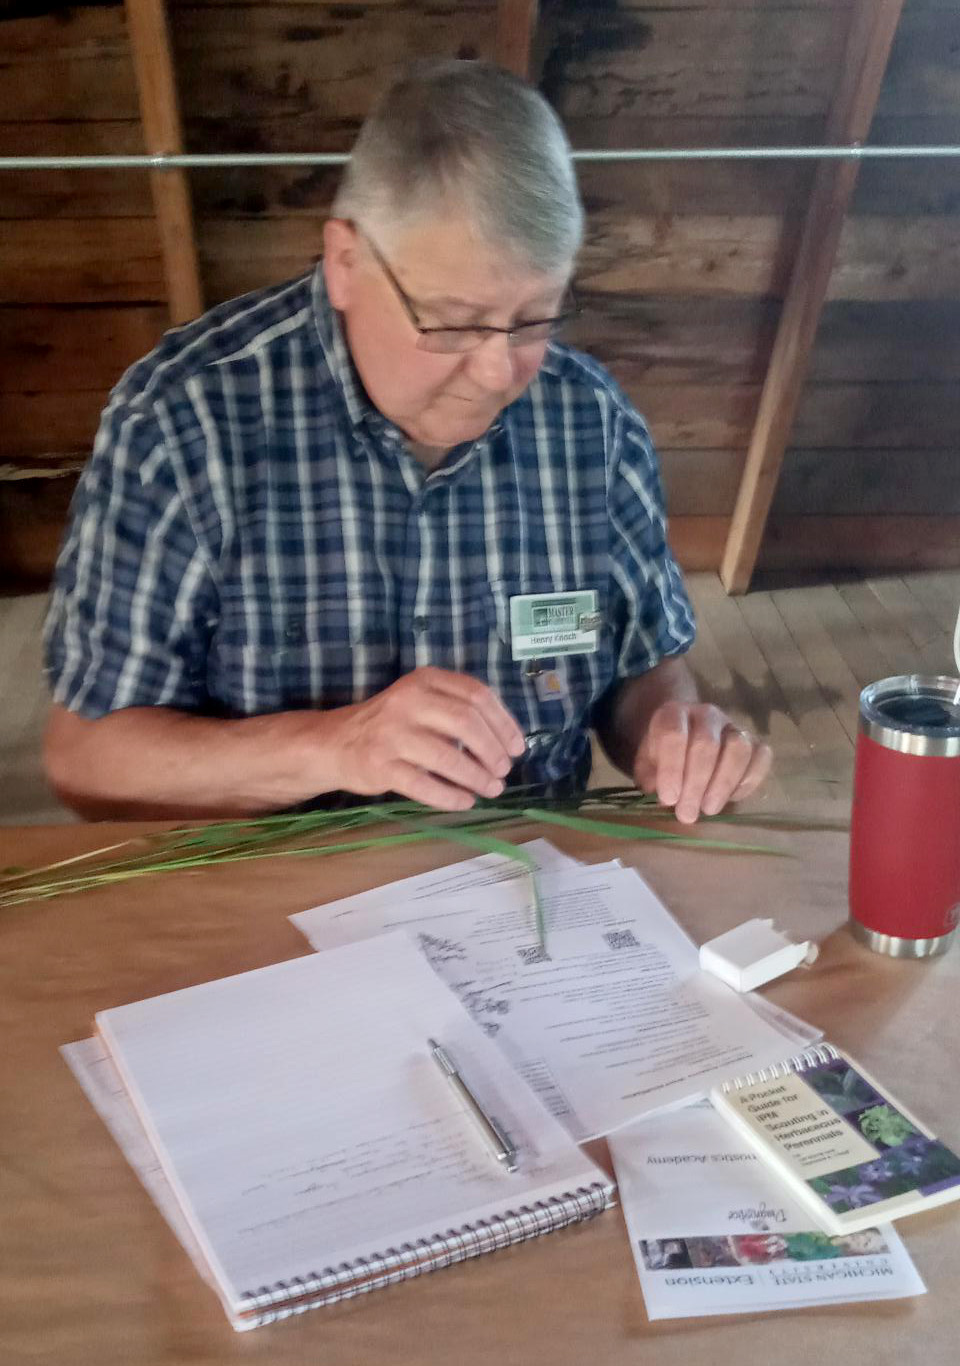 A man sitting at a table looking at grass samples.